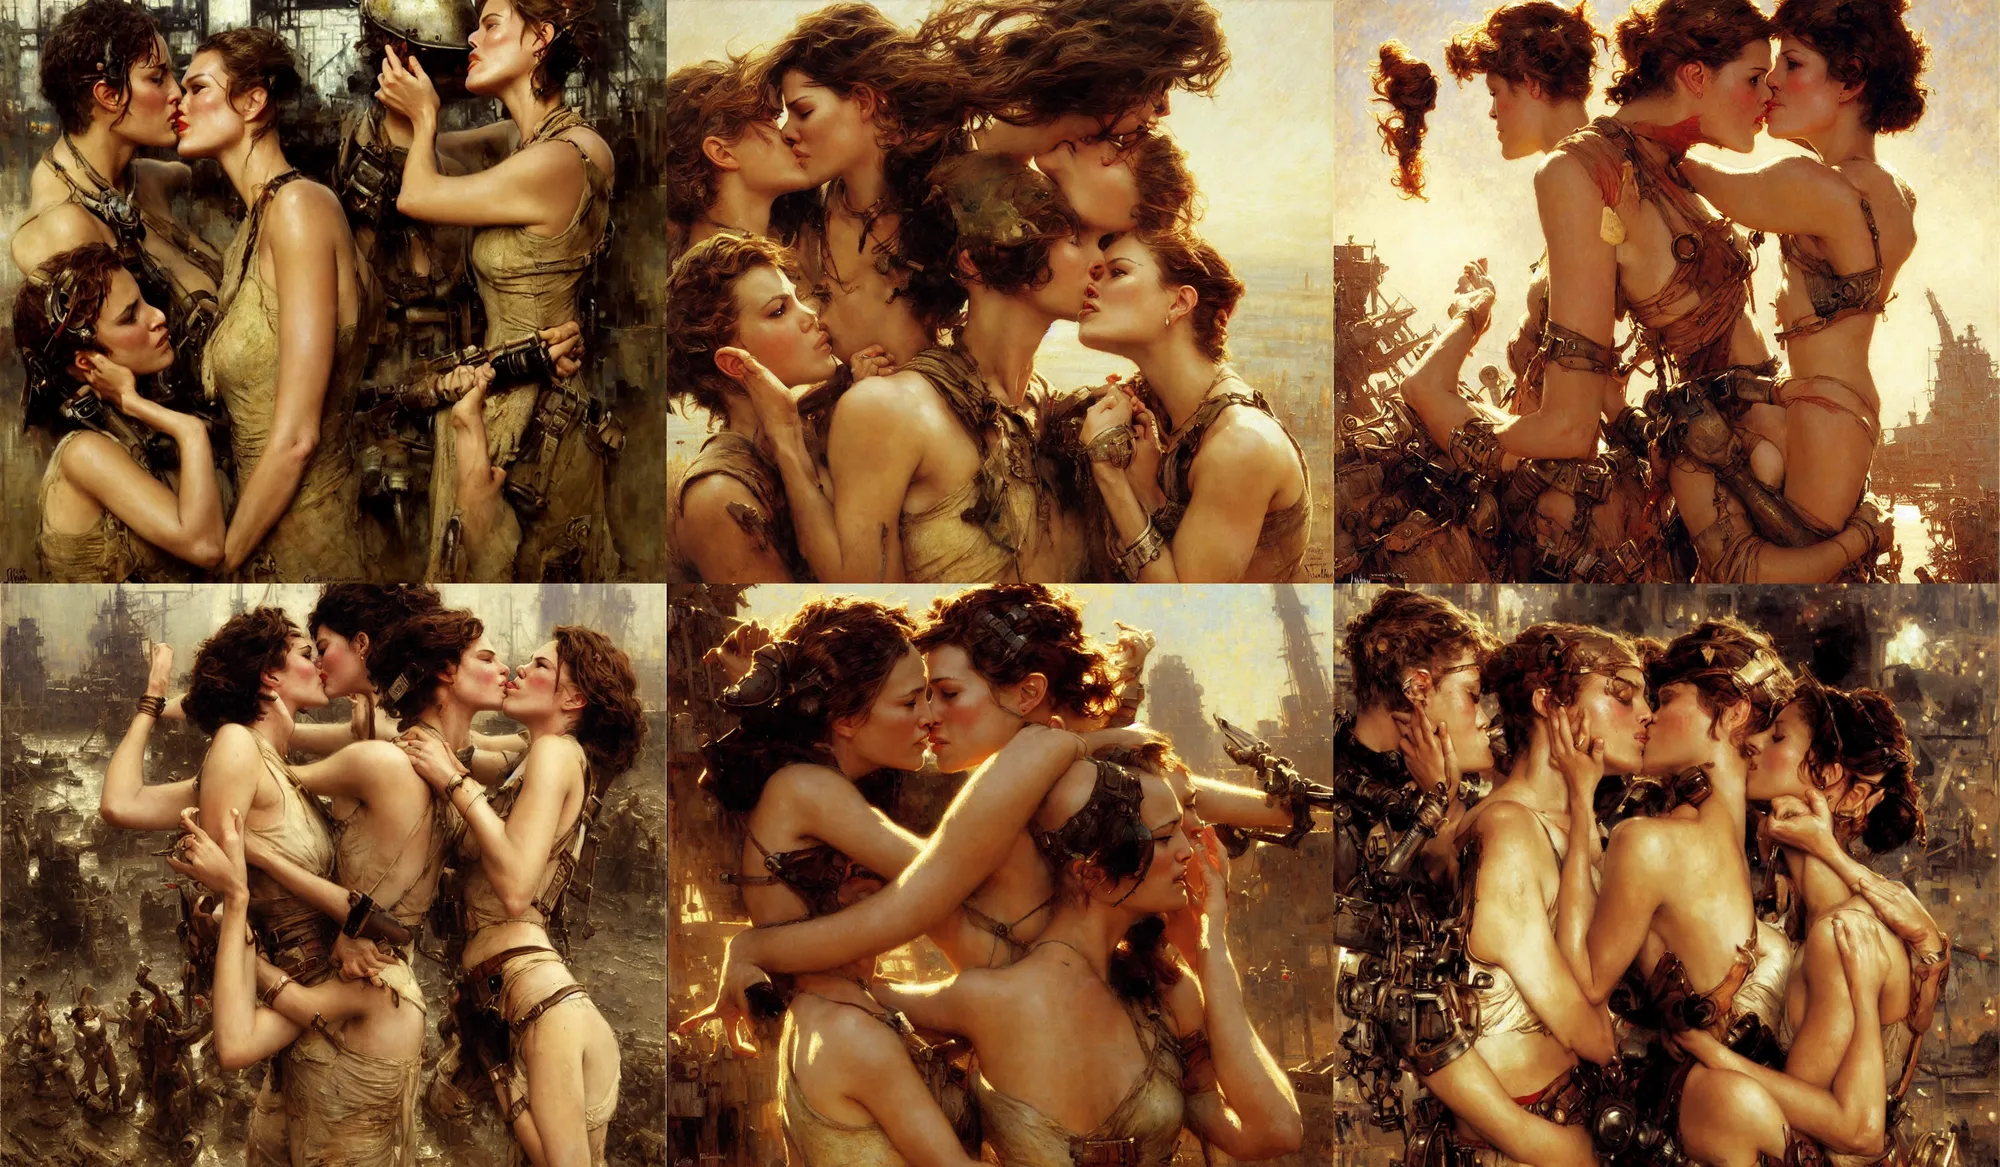 Prompt: natalie portman + milla jovovich kissing, ship breaking in bangladesh, dieselpunk, painting by gaston bussiere, craig mullins, j. c. leyendecker